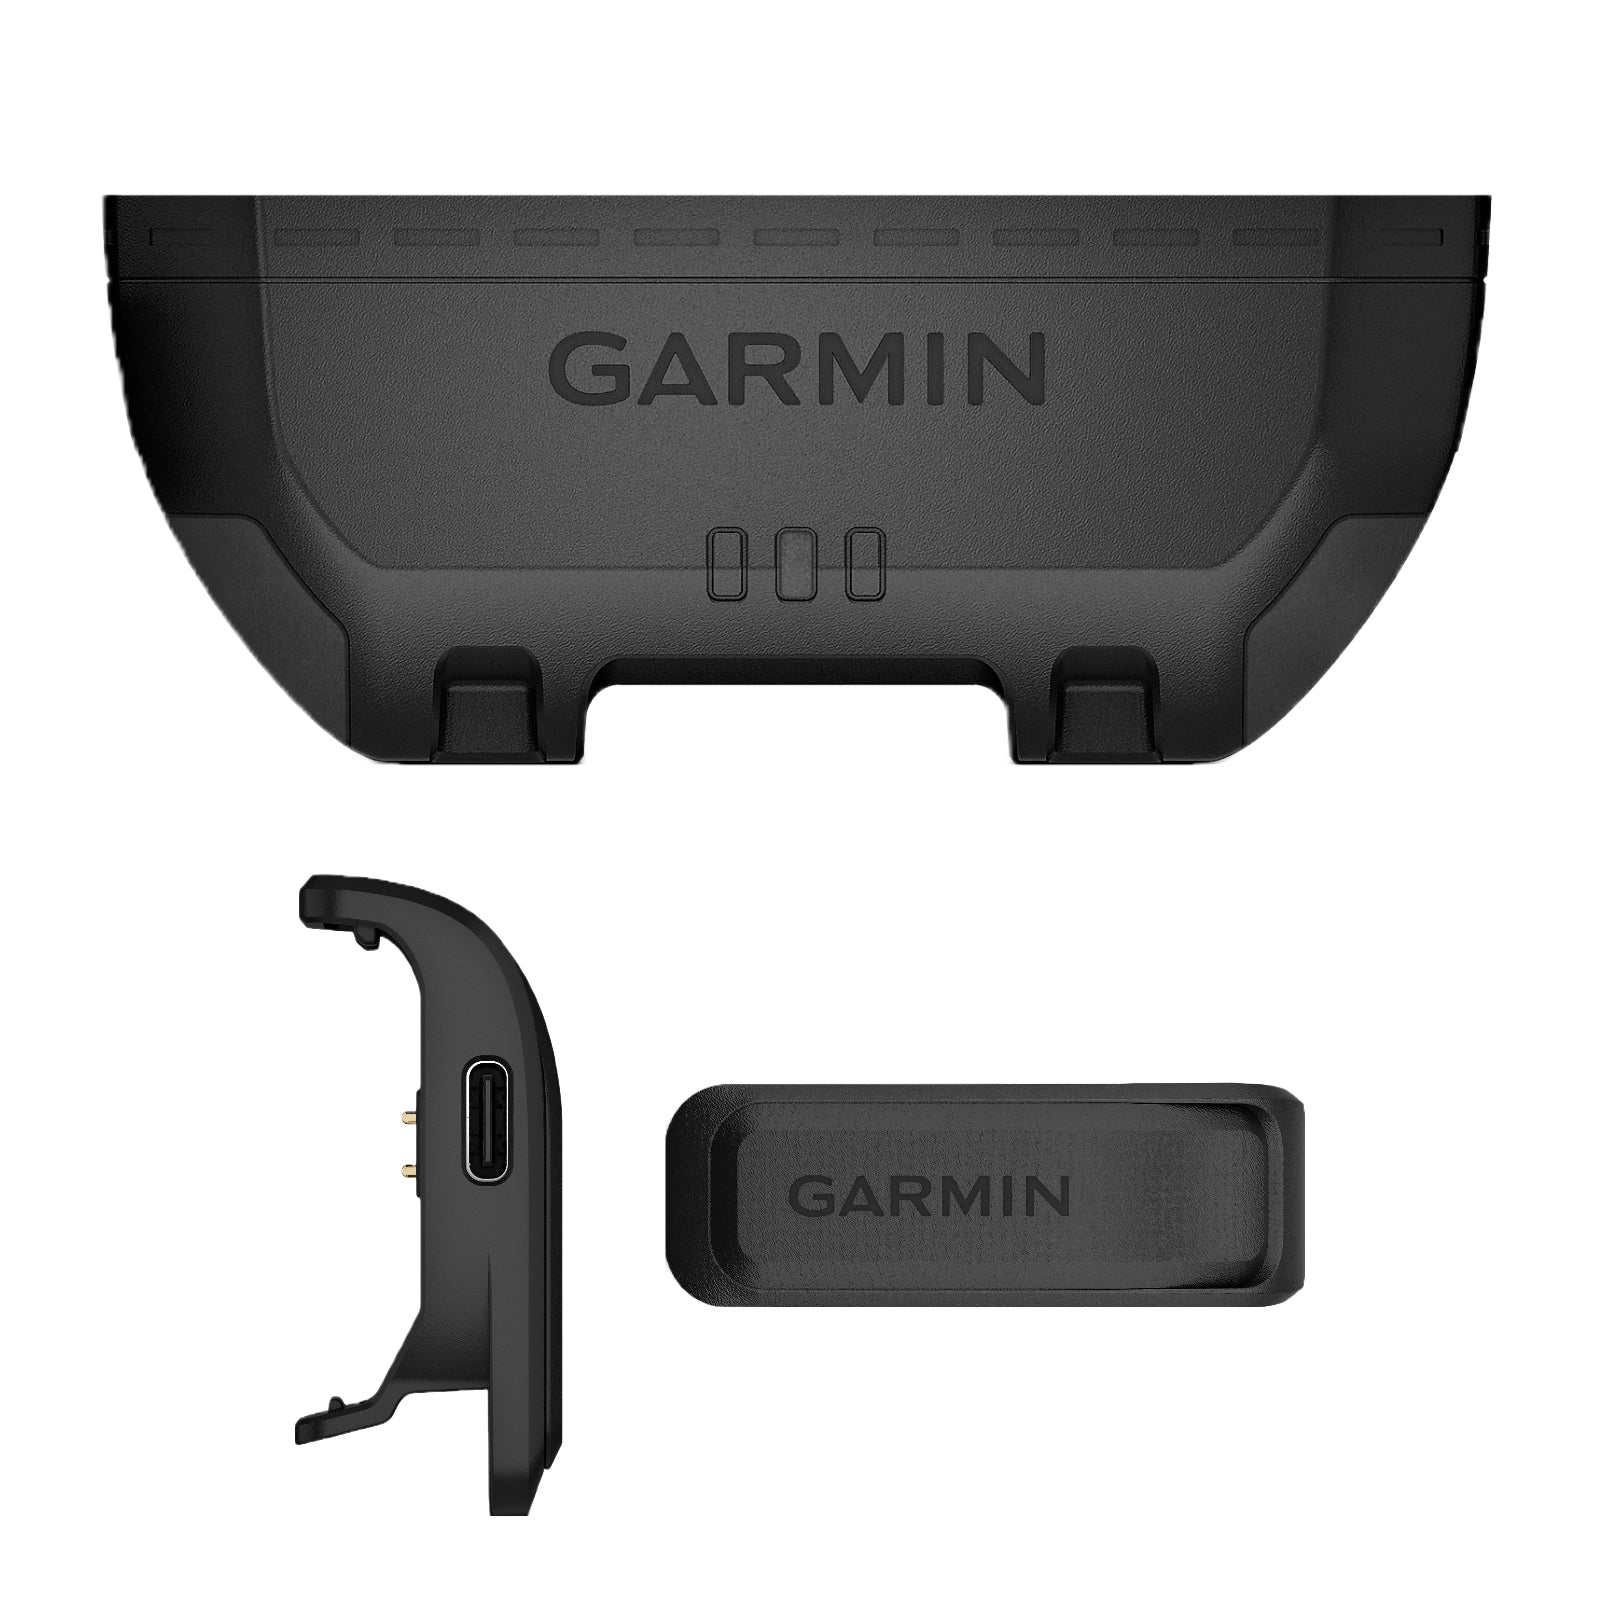 Changing the battery on a Garmin cadence sensor 